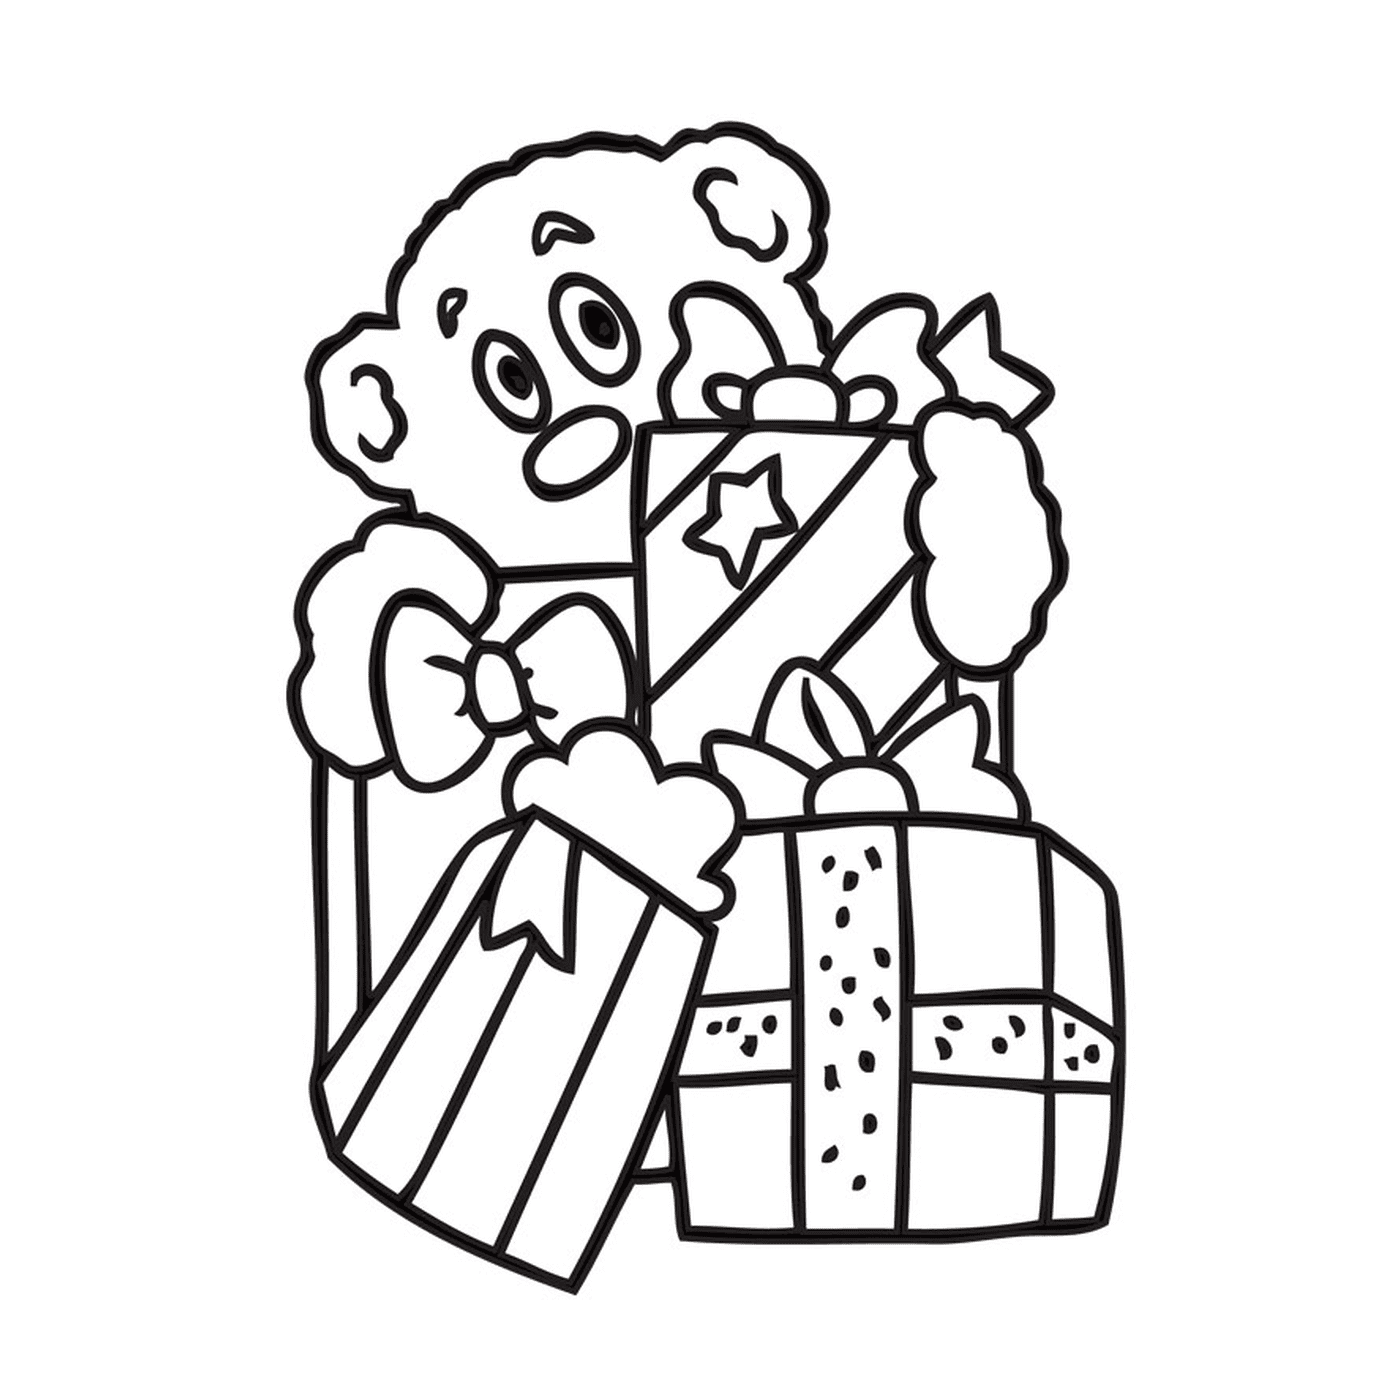  Osito de peluche sosteniendo una caja de regalo 